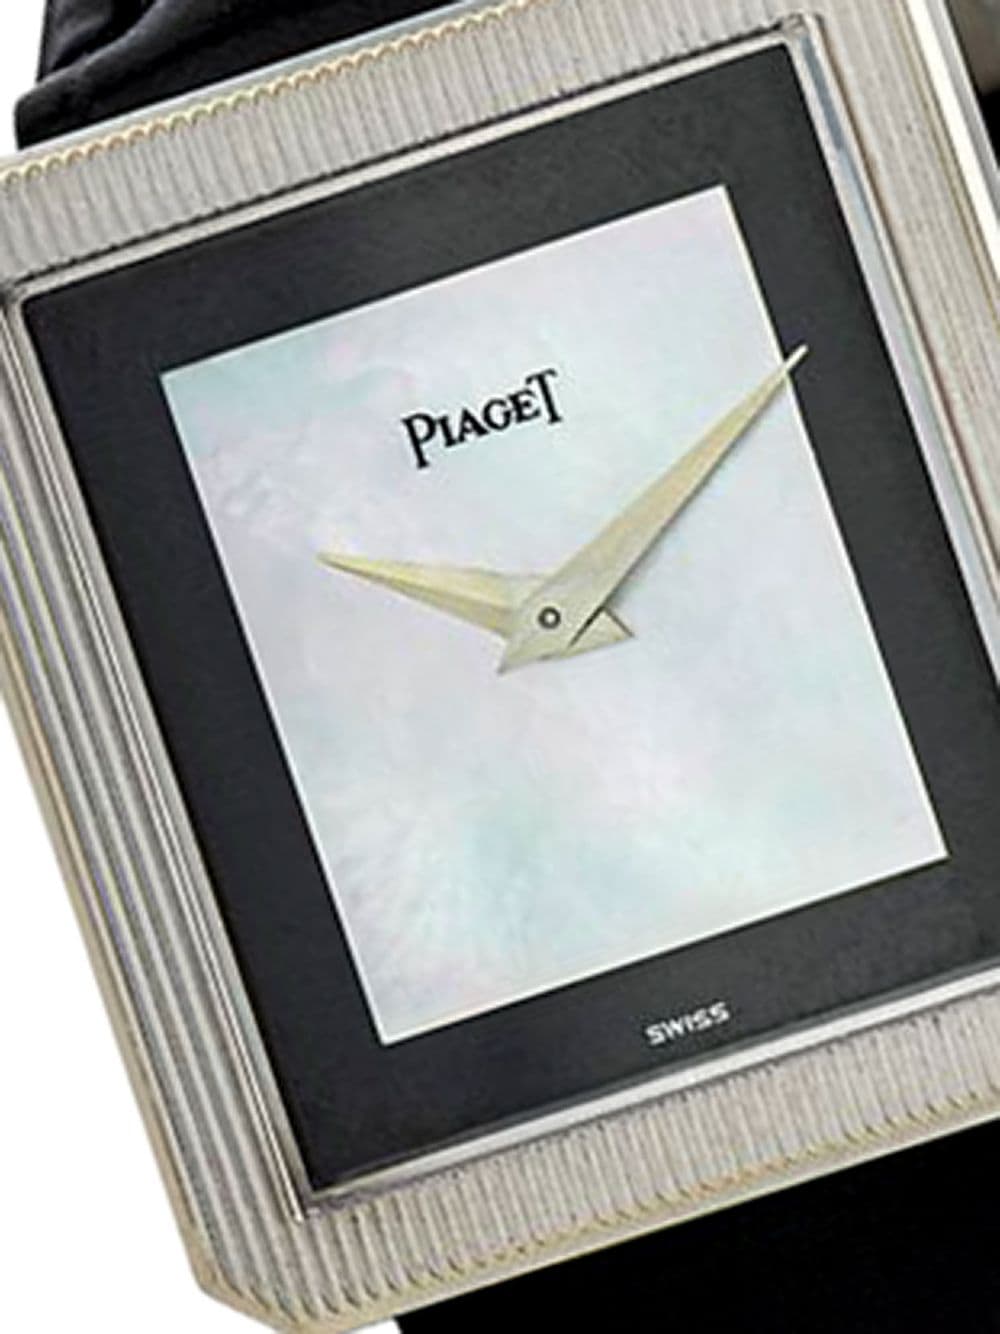 фото Piaget наручные часы miss protocole 20 мм 1980-го года